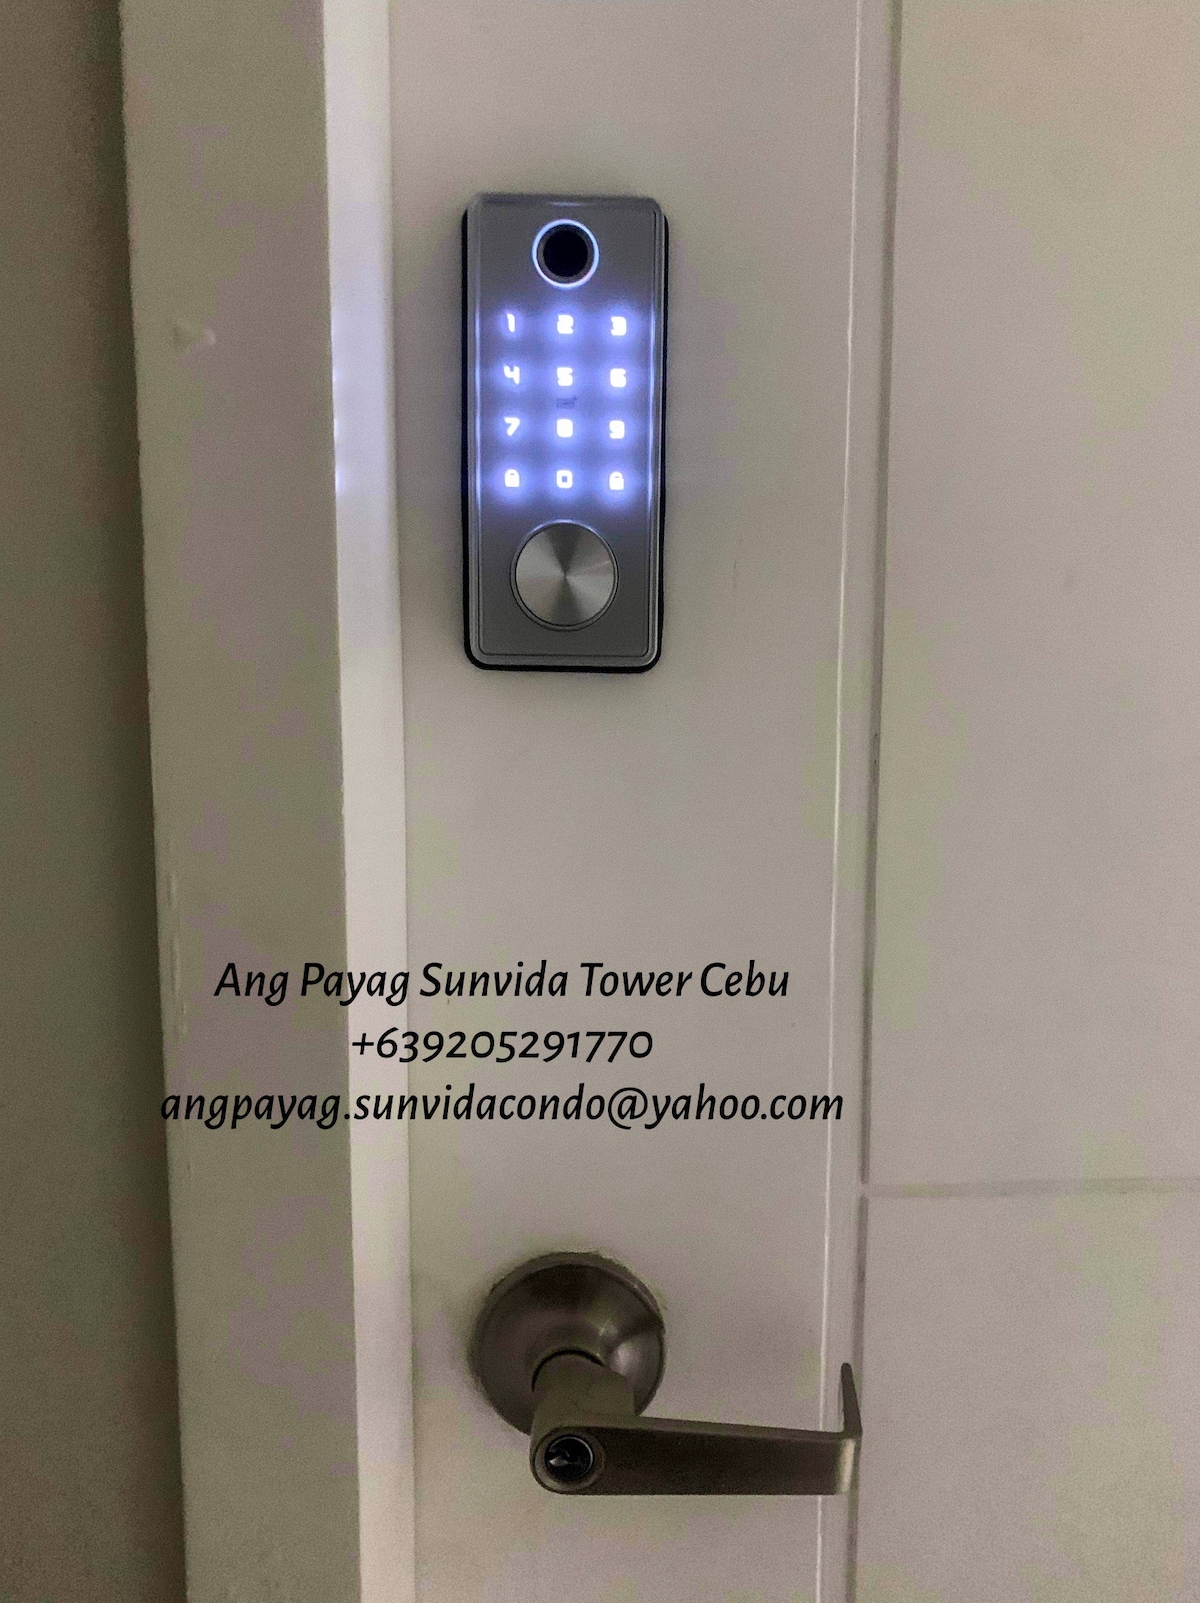 "Ang Payag" in Sunvida (SM City Cebu)